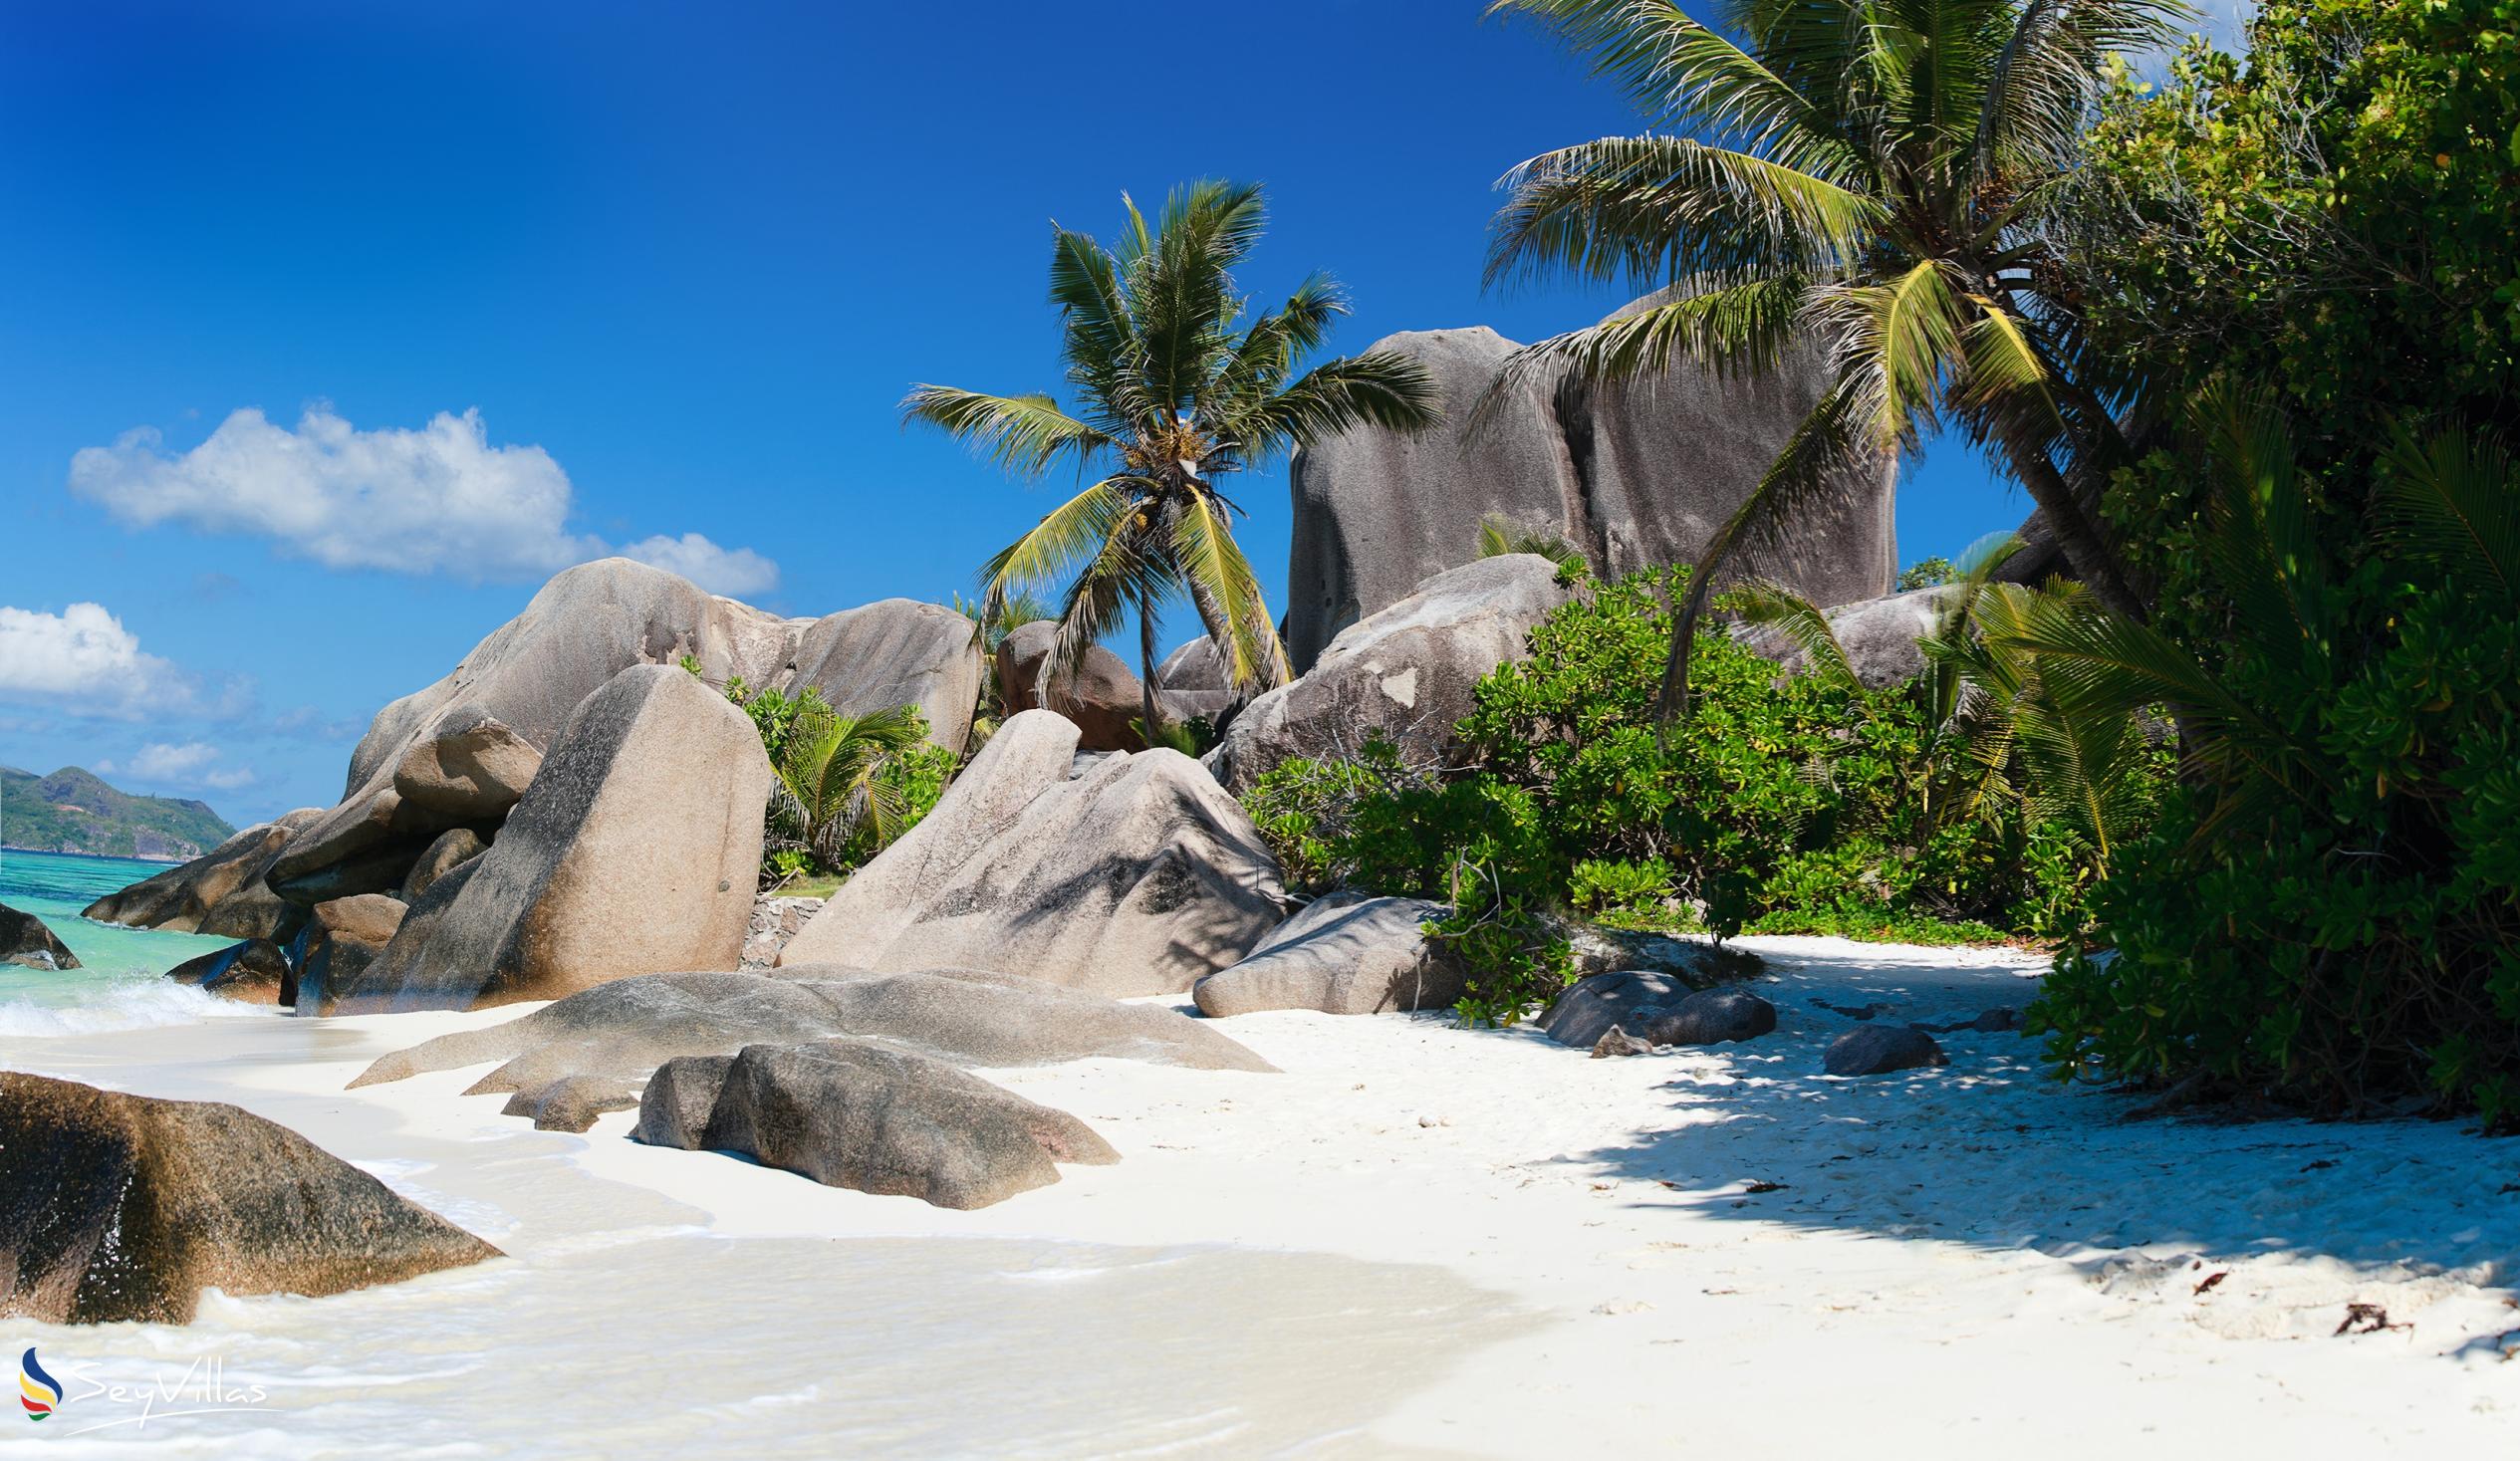 Photo 55: Pegasus Cruise (Variety Garden of Eden 4 nights) - Beaches - Seychelles (Seychelles)